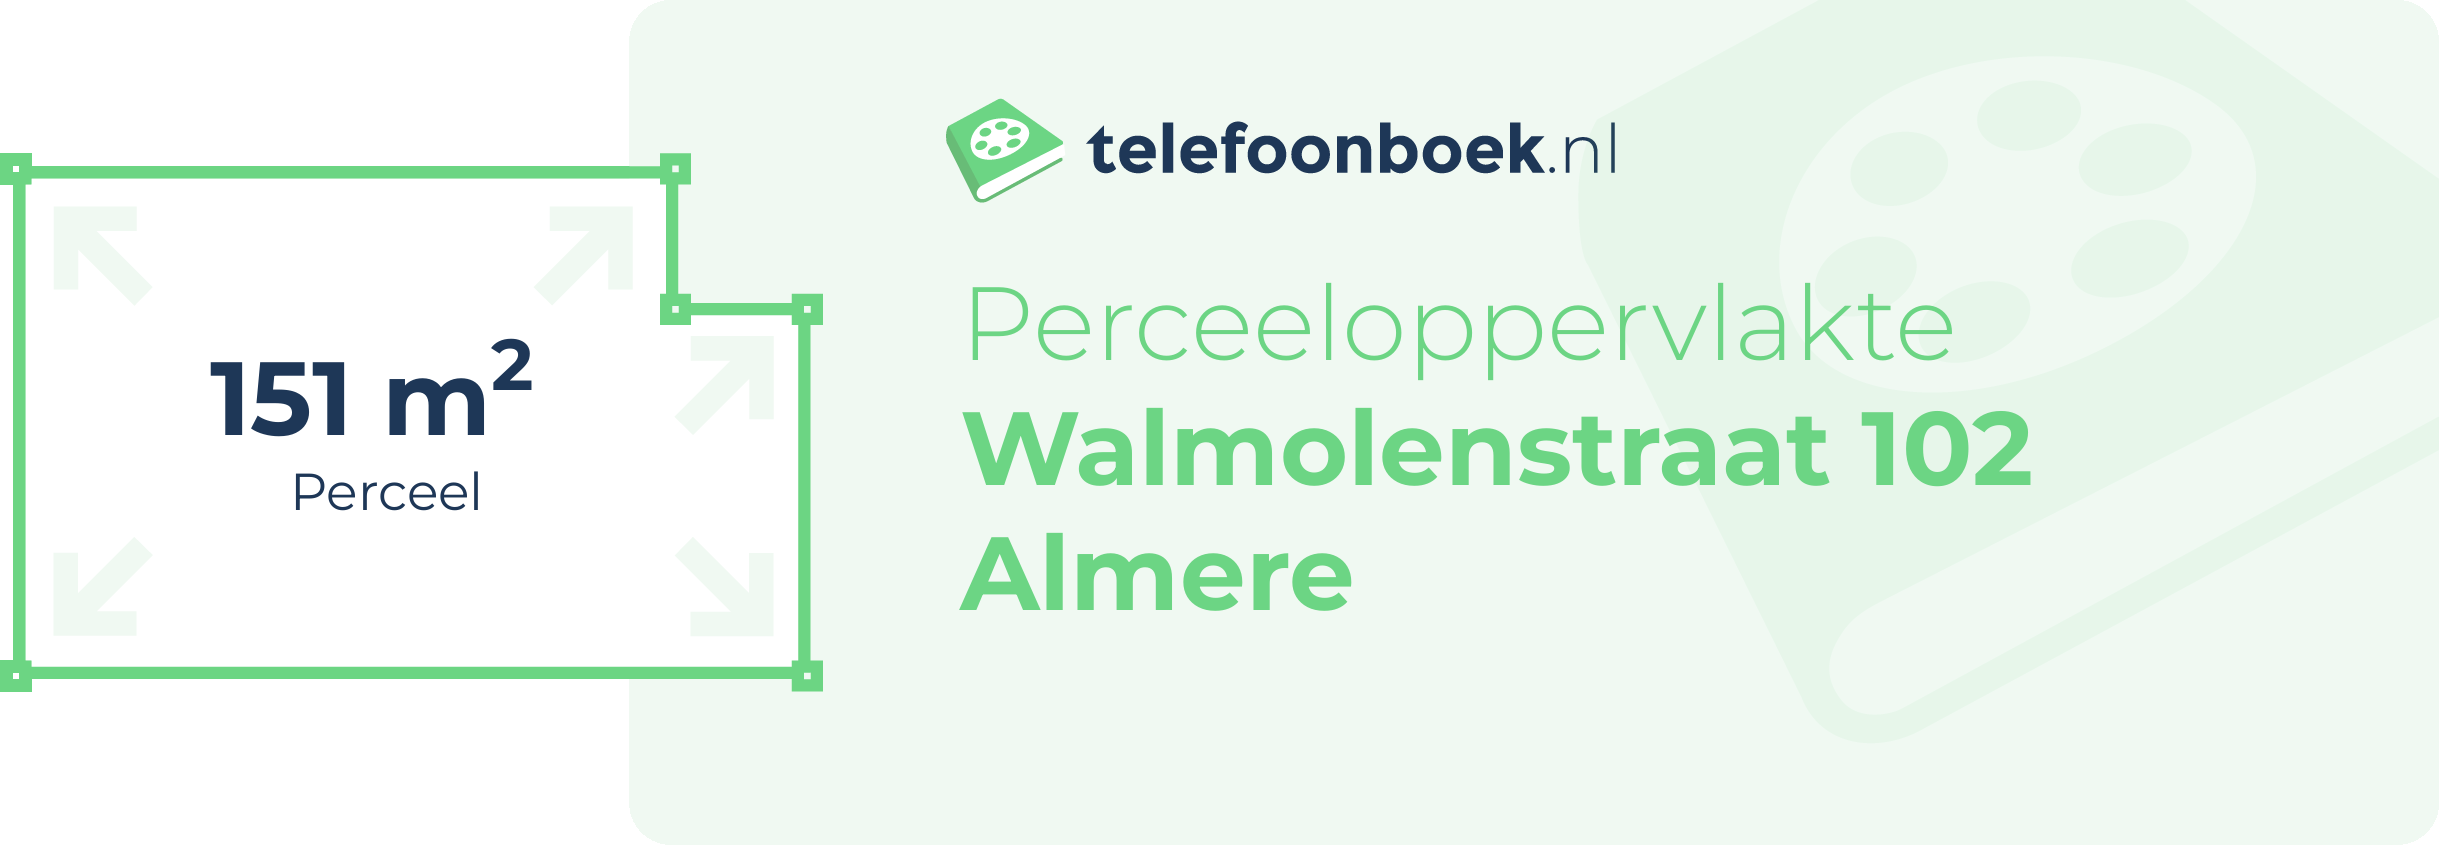 Perceeloppervlakte Walmolenstraat 102 Almere